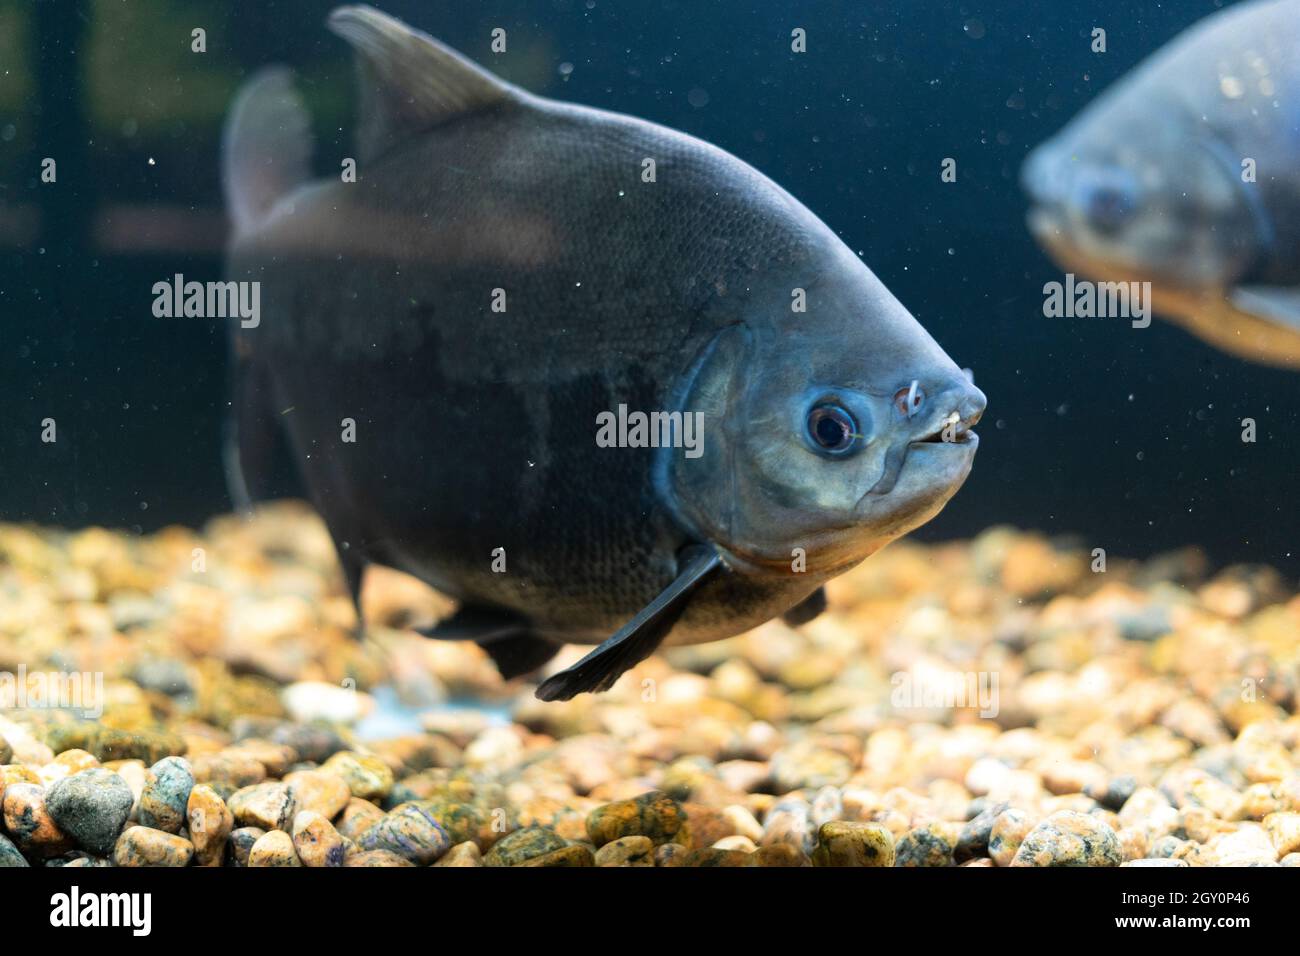 A school of red pacu piranha fish swims in the aquarium. Predatory fish. Stock Photo